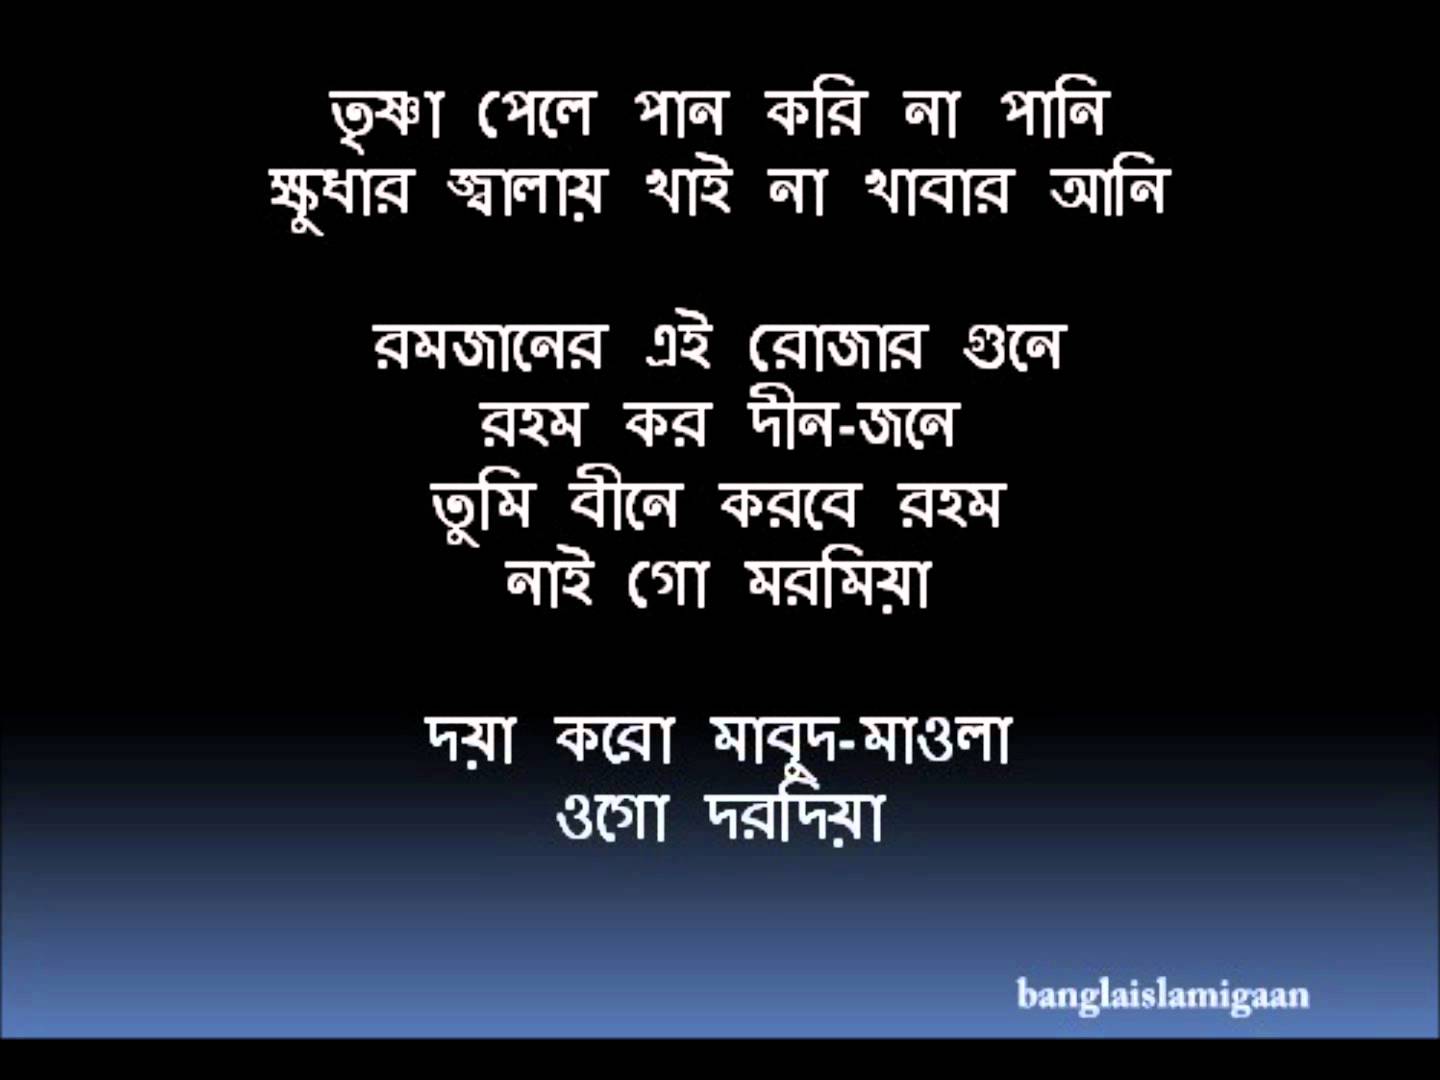 bangla islamische tapete,text,schriftart,fotografie,bildschirmfoto